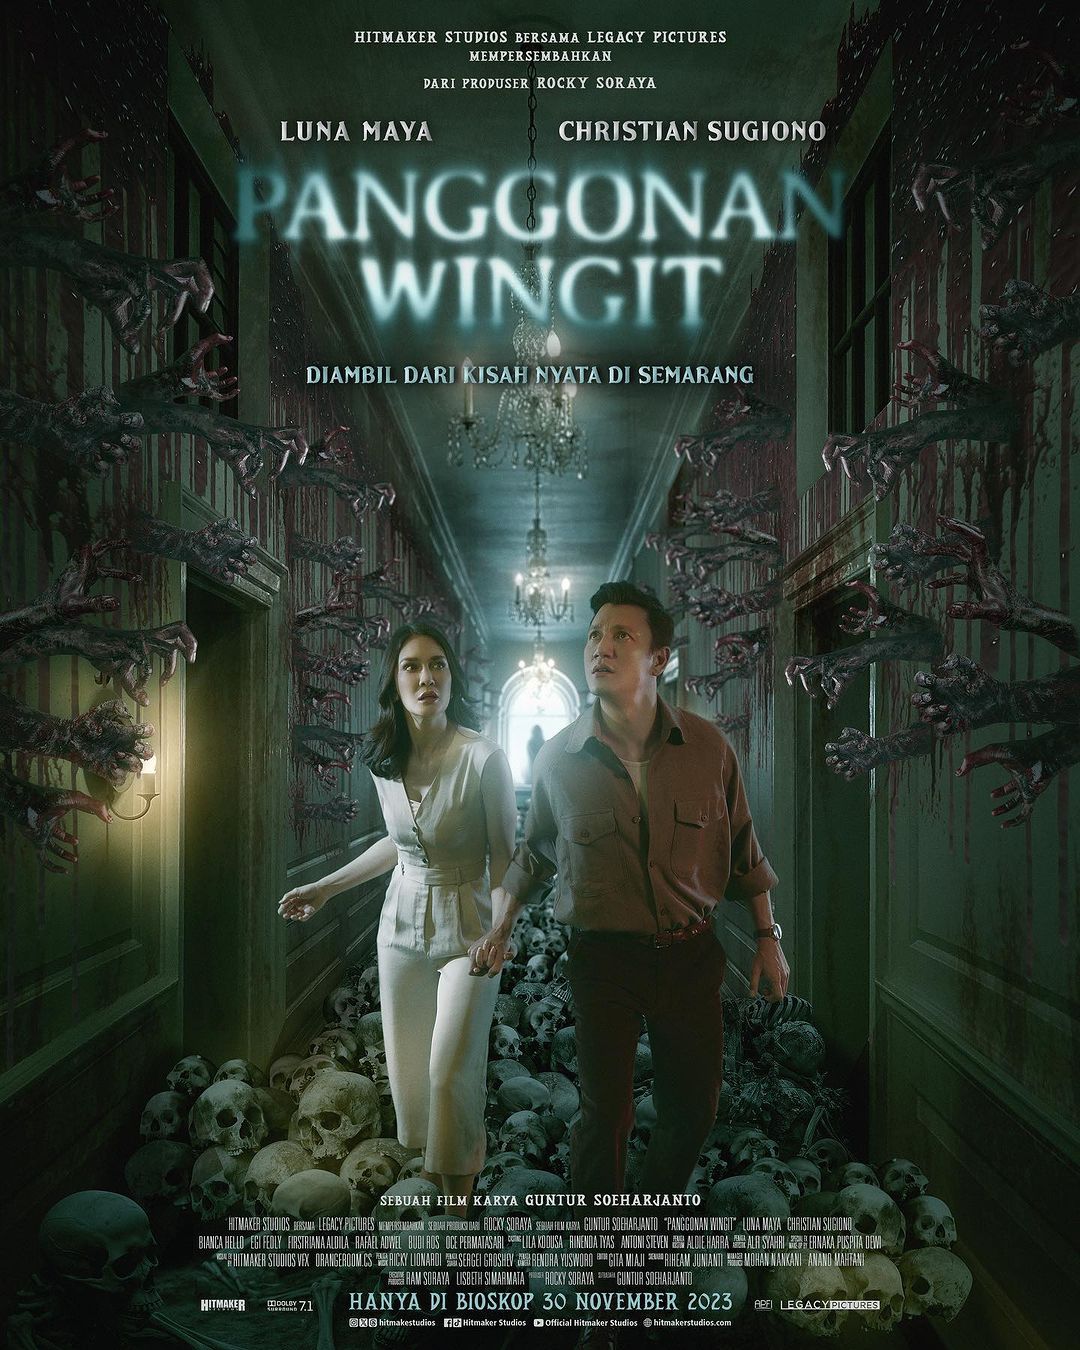 Christian Sugiono dan Luna Maya Proses Syuting Panggonan Wingit